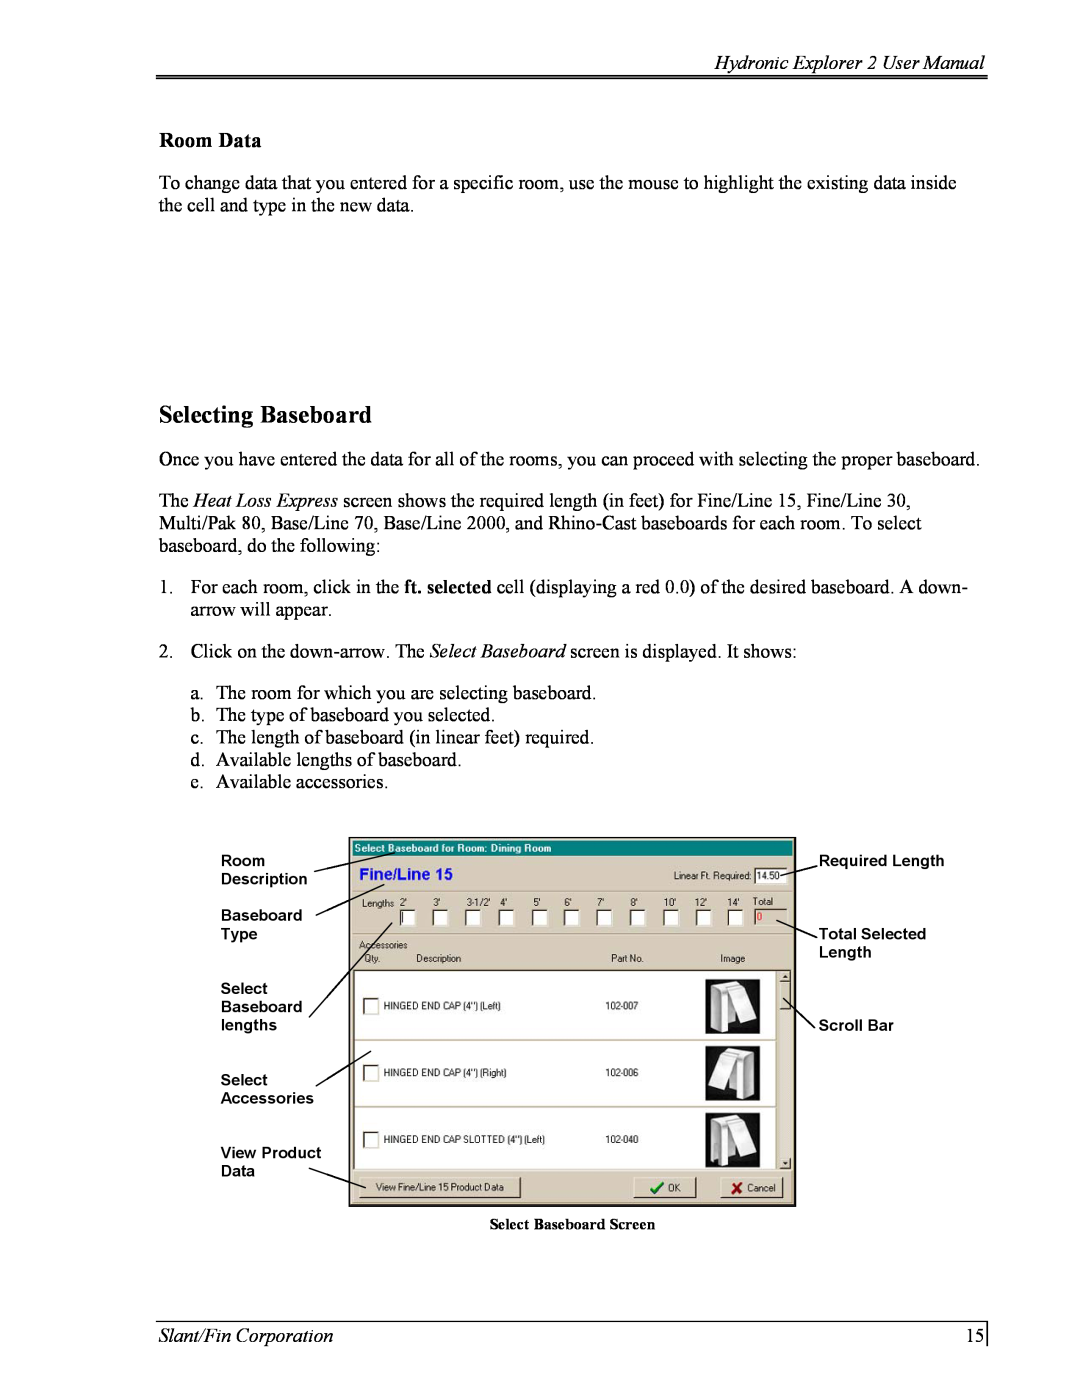 Slant/Fin Hydronic Explorer 2 user manual Selecting Baseboard, Room Data, Slant/Fin Corporation 